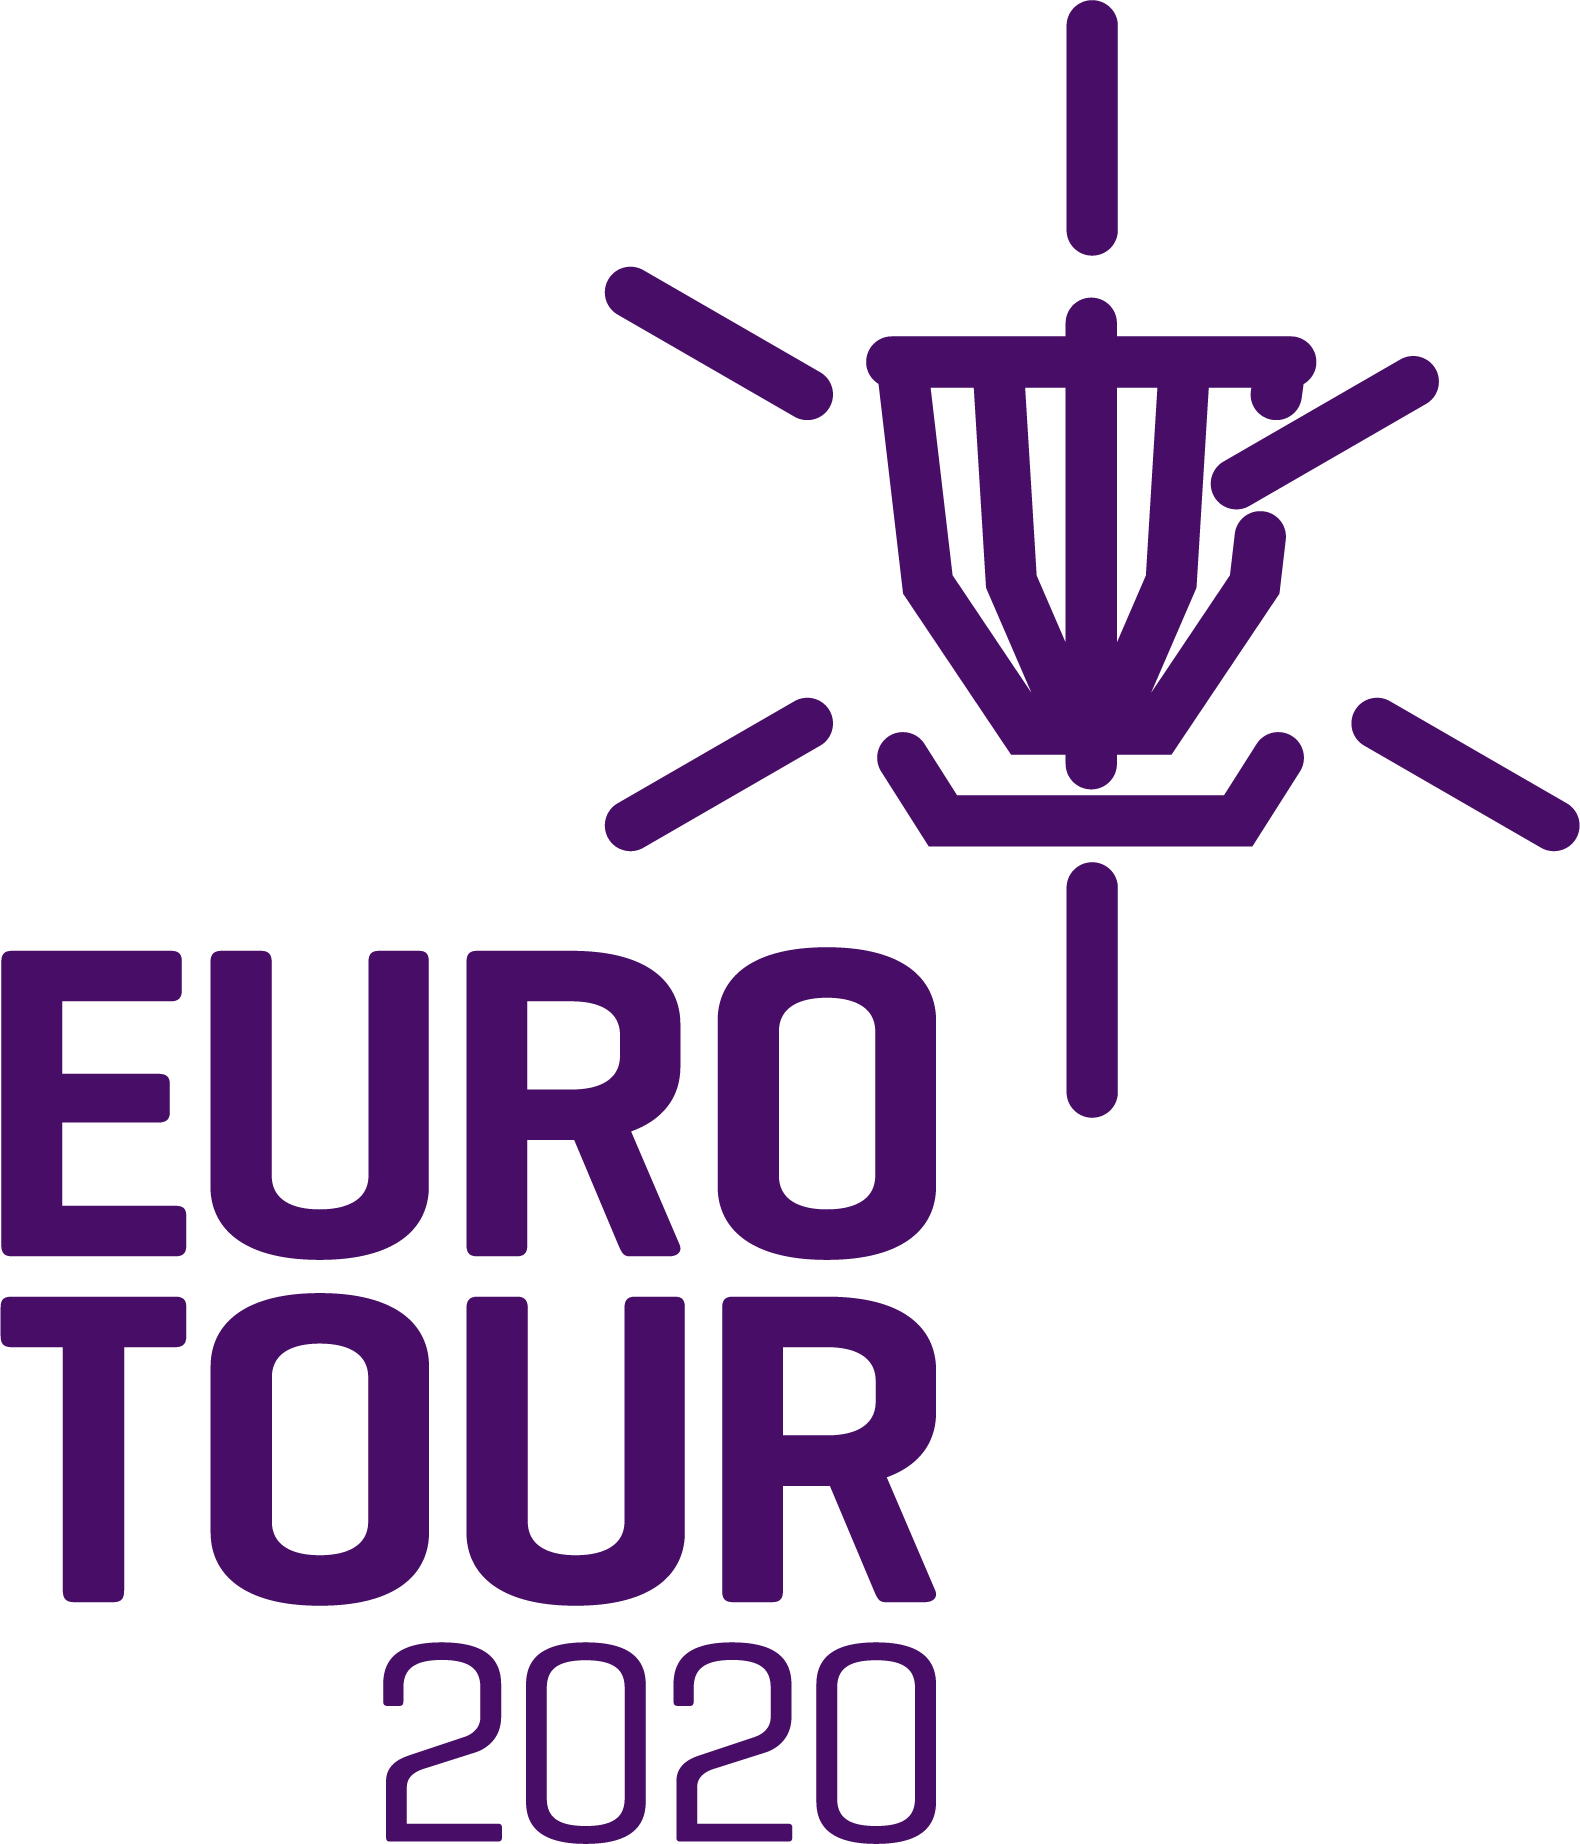 PDGA Europe Professional Disc Golf Association